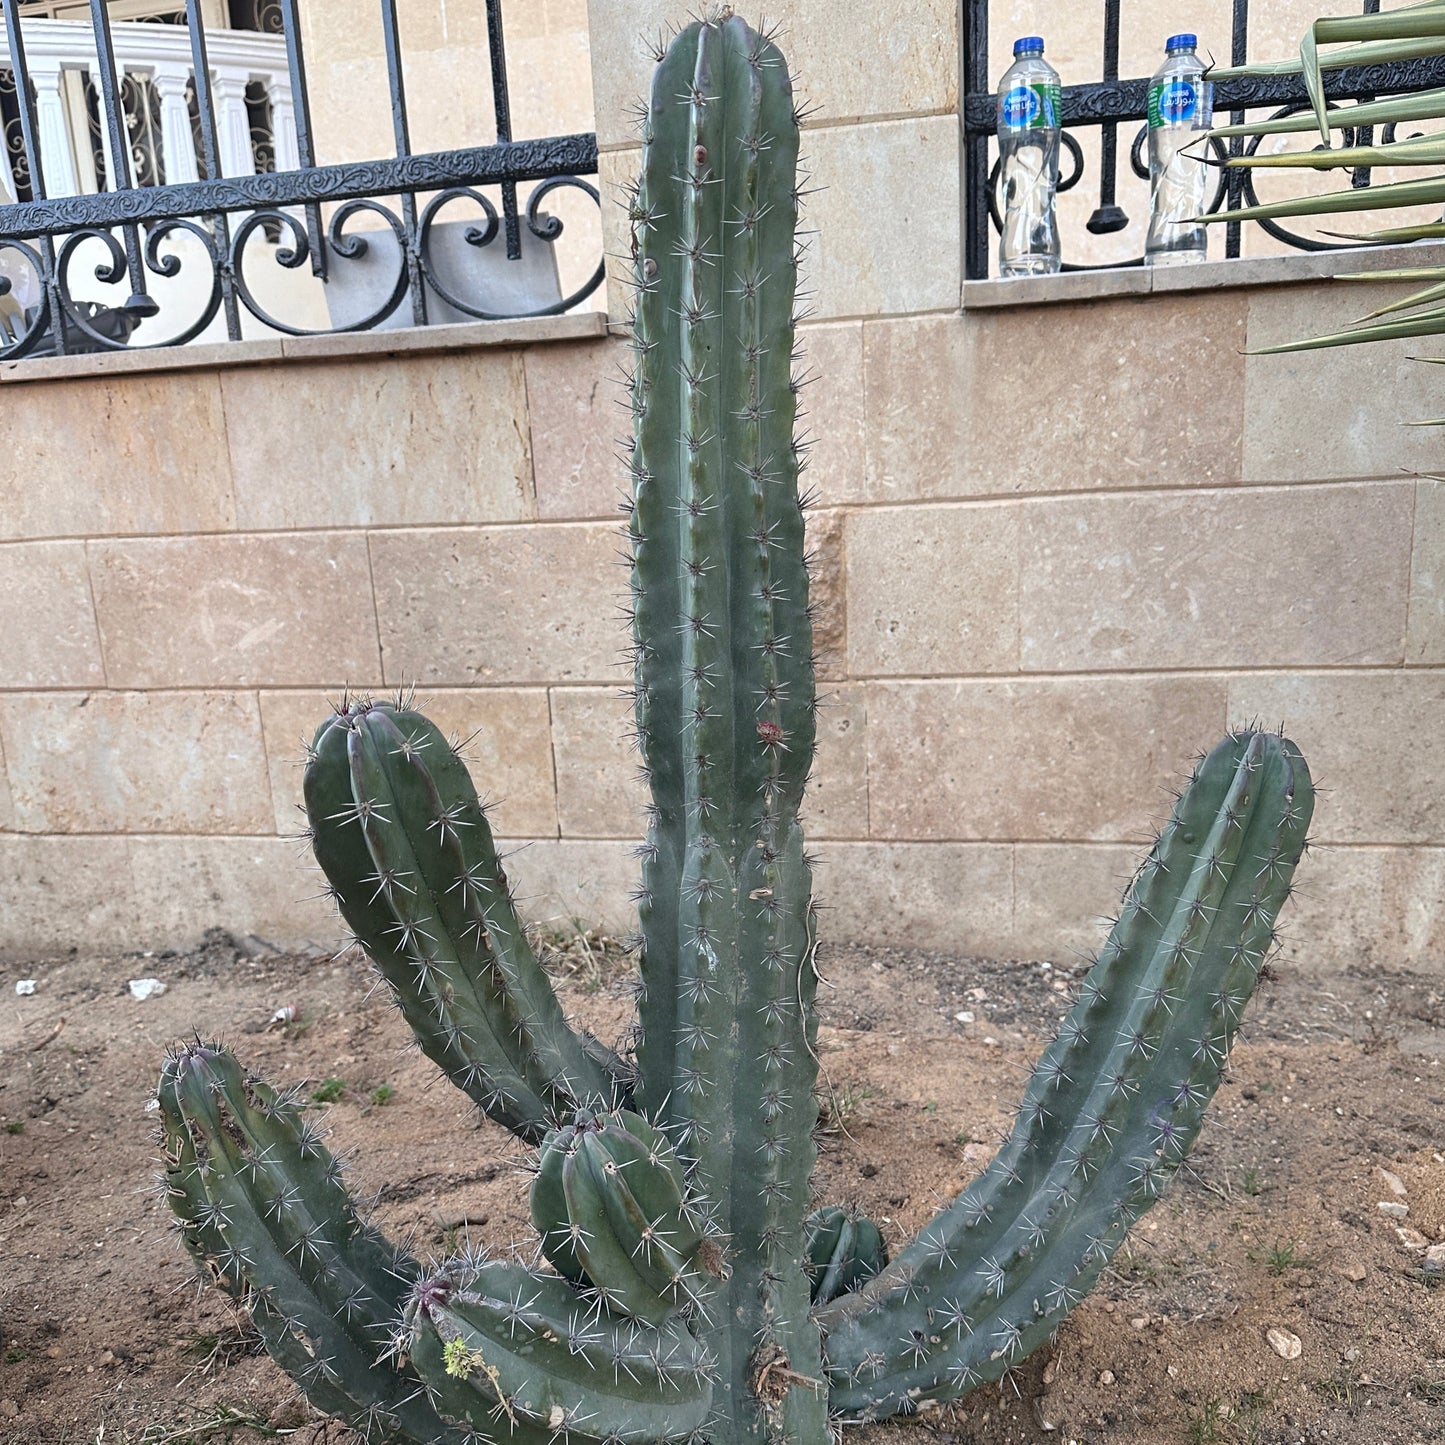 Bilberry Cactus